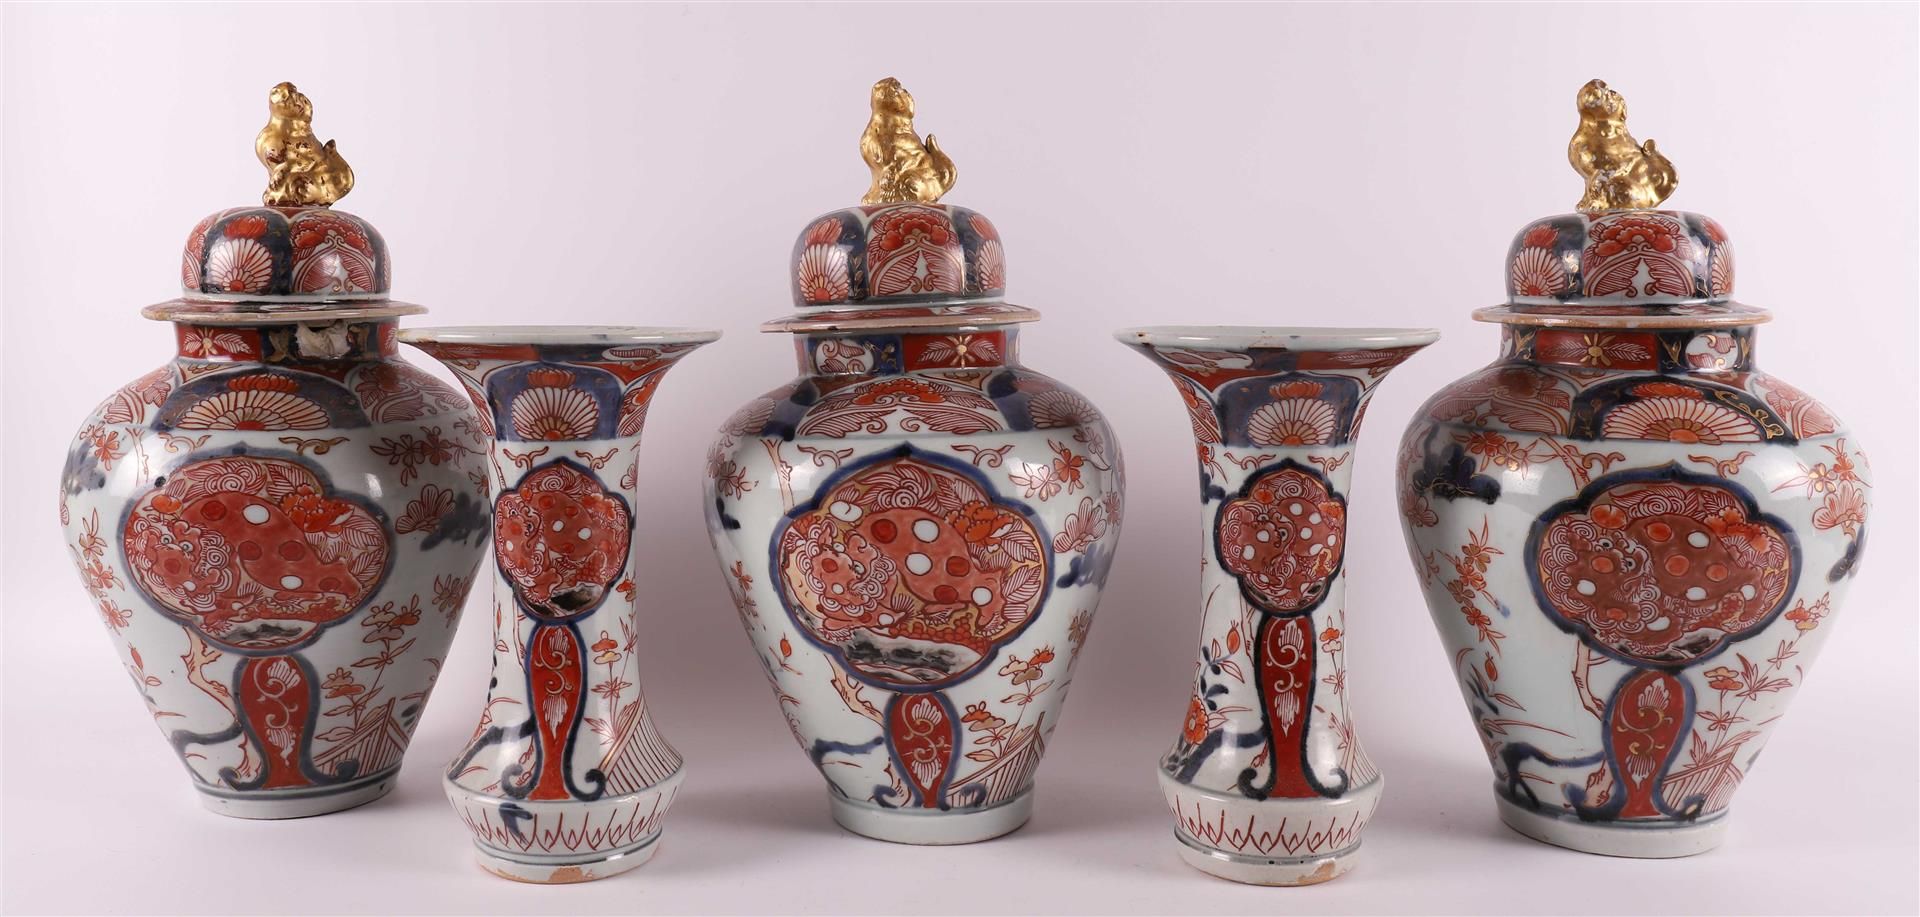 A five-piece porcelain Imari cabinet set, Japan, Edo, around 1700.